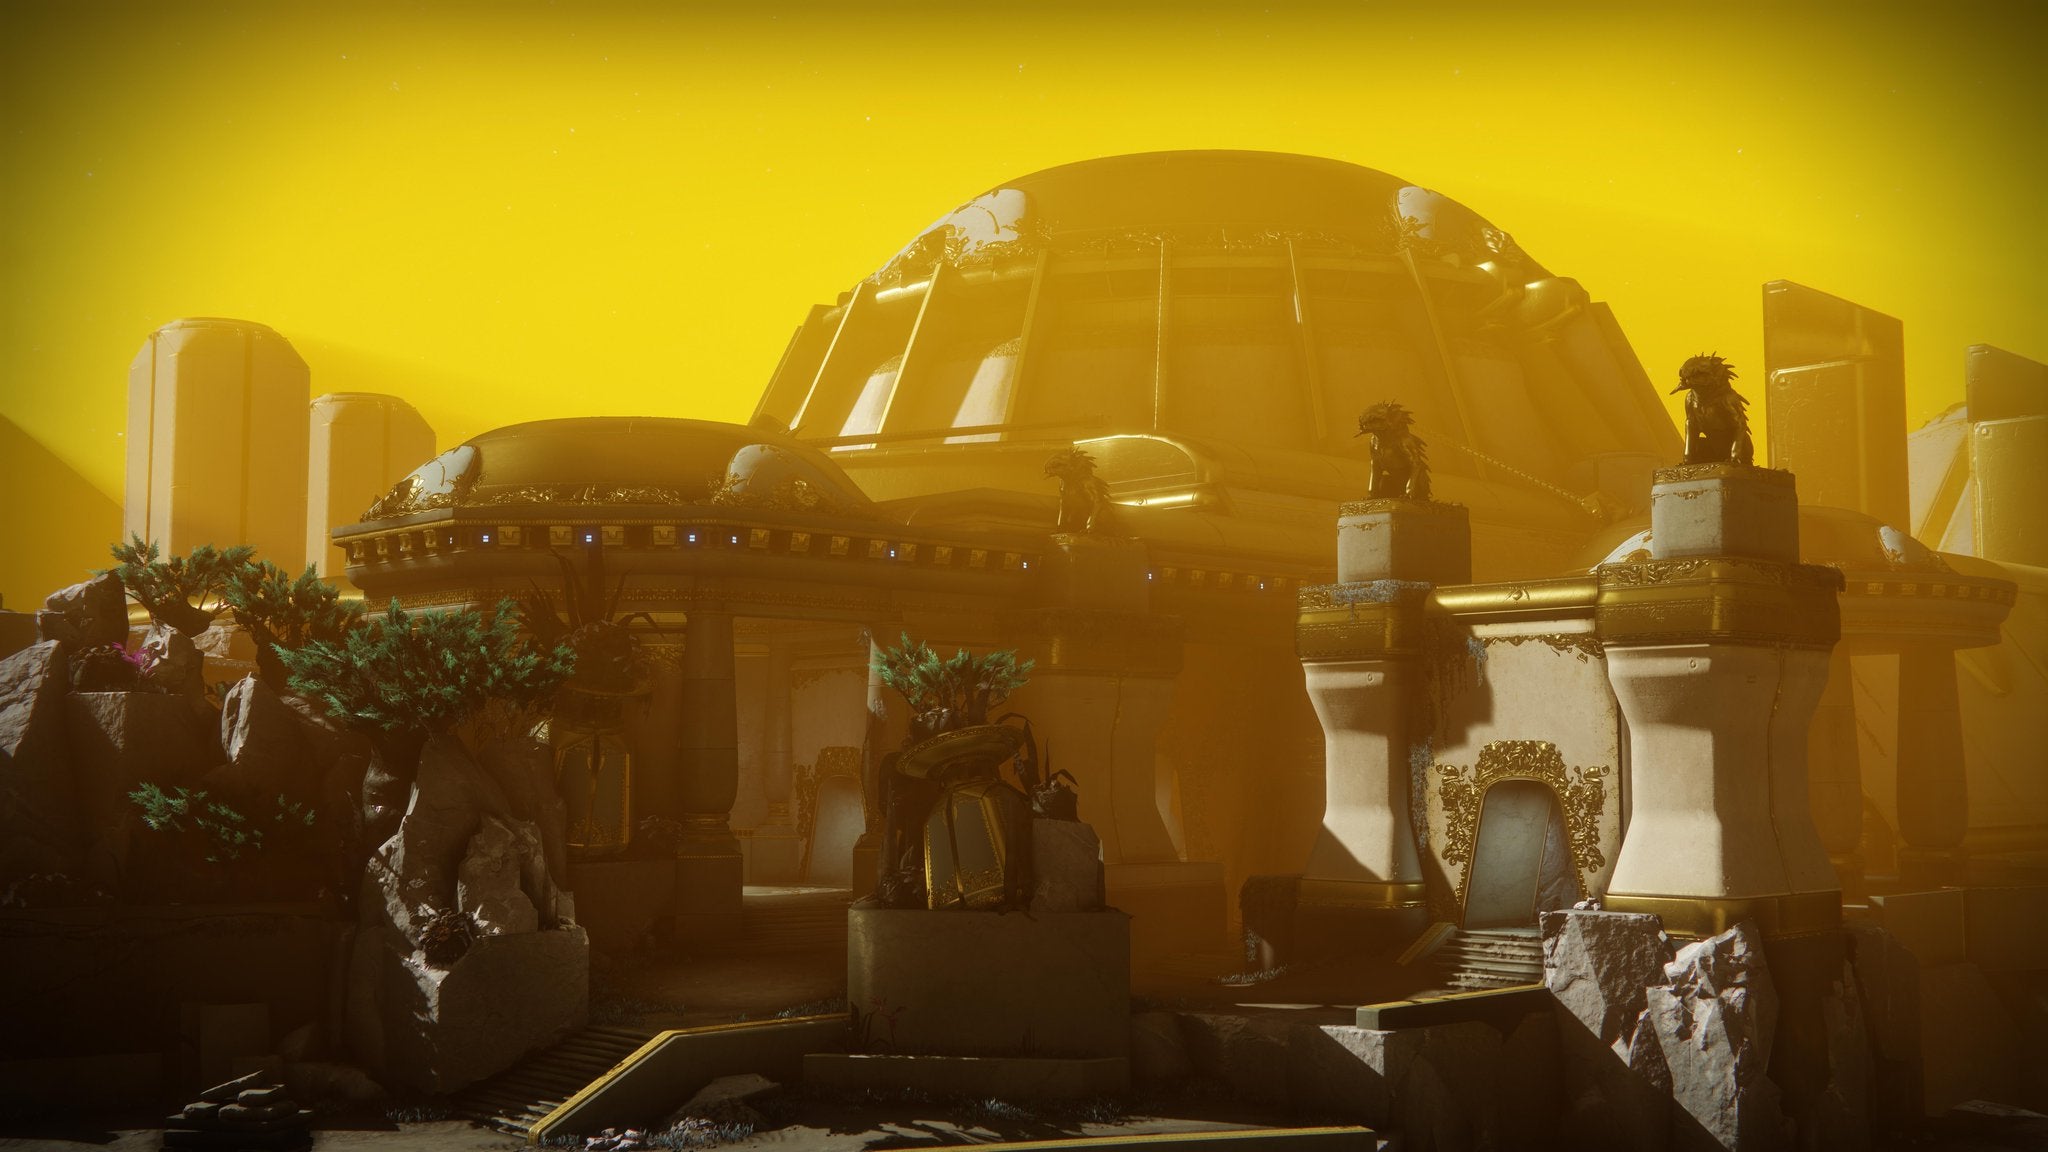 Image for Destiny 2 Leviathan raid guide: complete walkthrough, defeat Calus, secret chest locations and loot